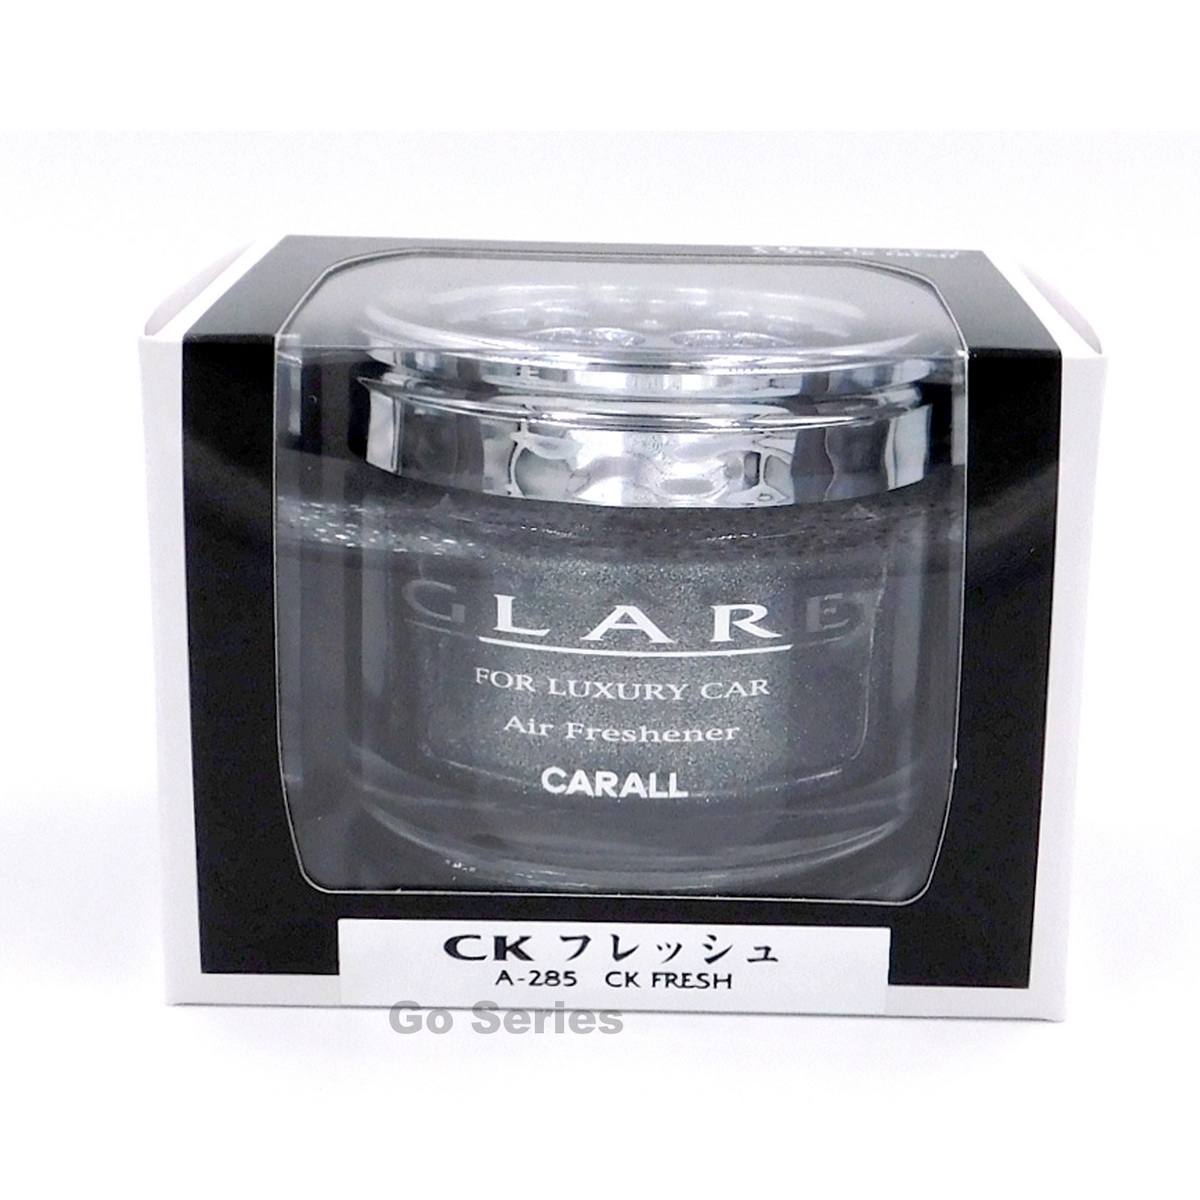 Carall Glare CK Fresh LUXURY Car Air Freshener Fragrance A-285 Made in Japan